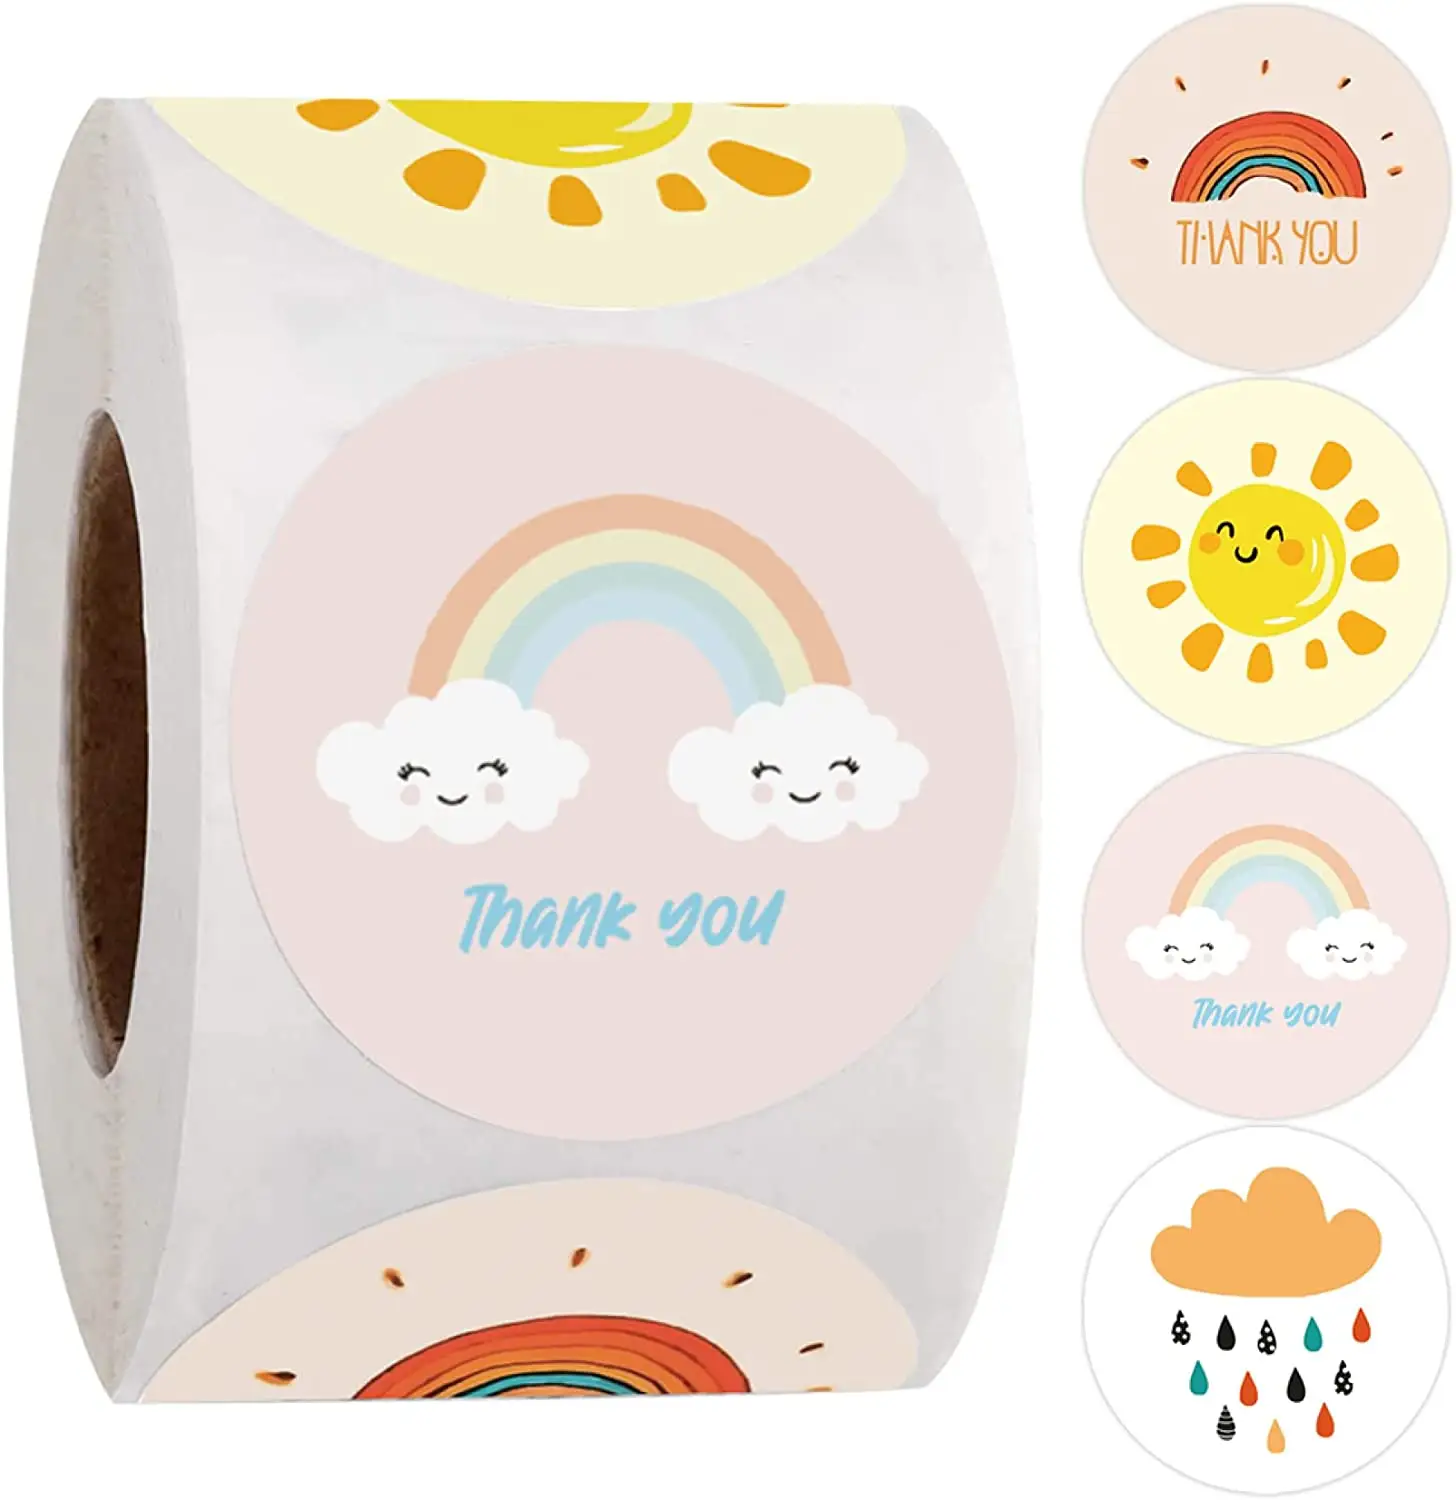 100-500 Pcs Round Cartoon Thank You Stickers Cute Sun Rainbow Clouds Sticker for Handmade Gift Decor Kids Labels